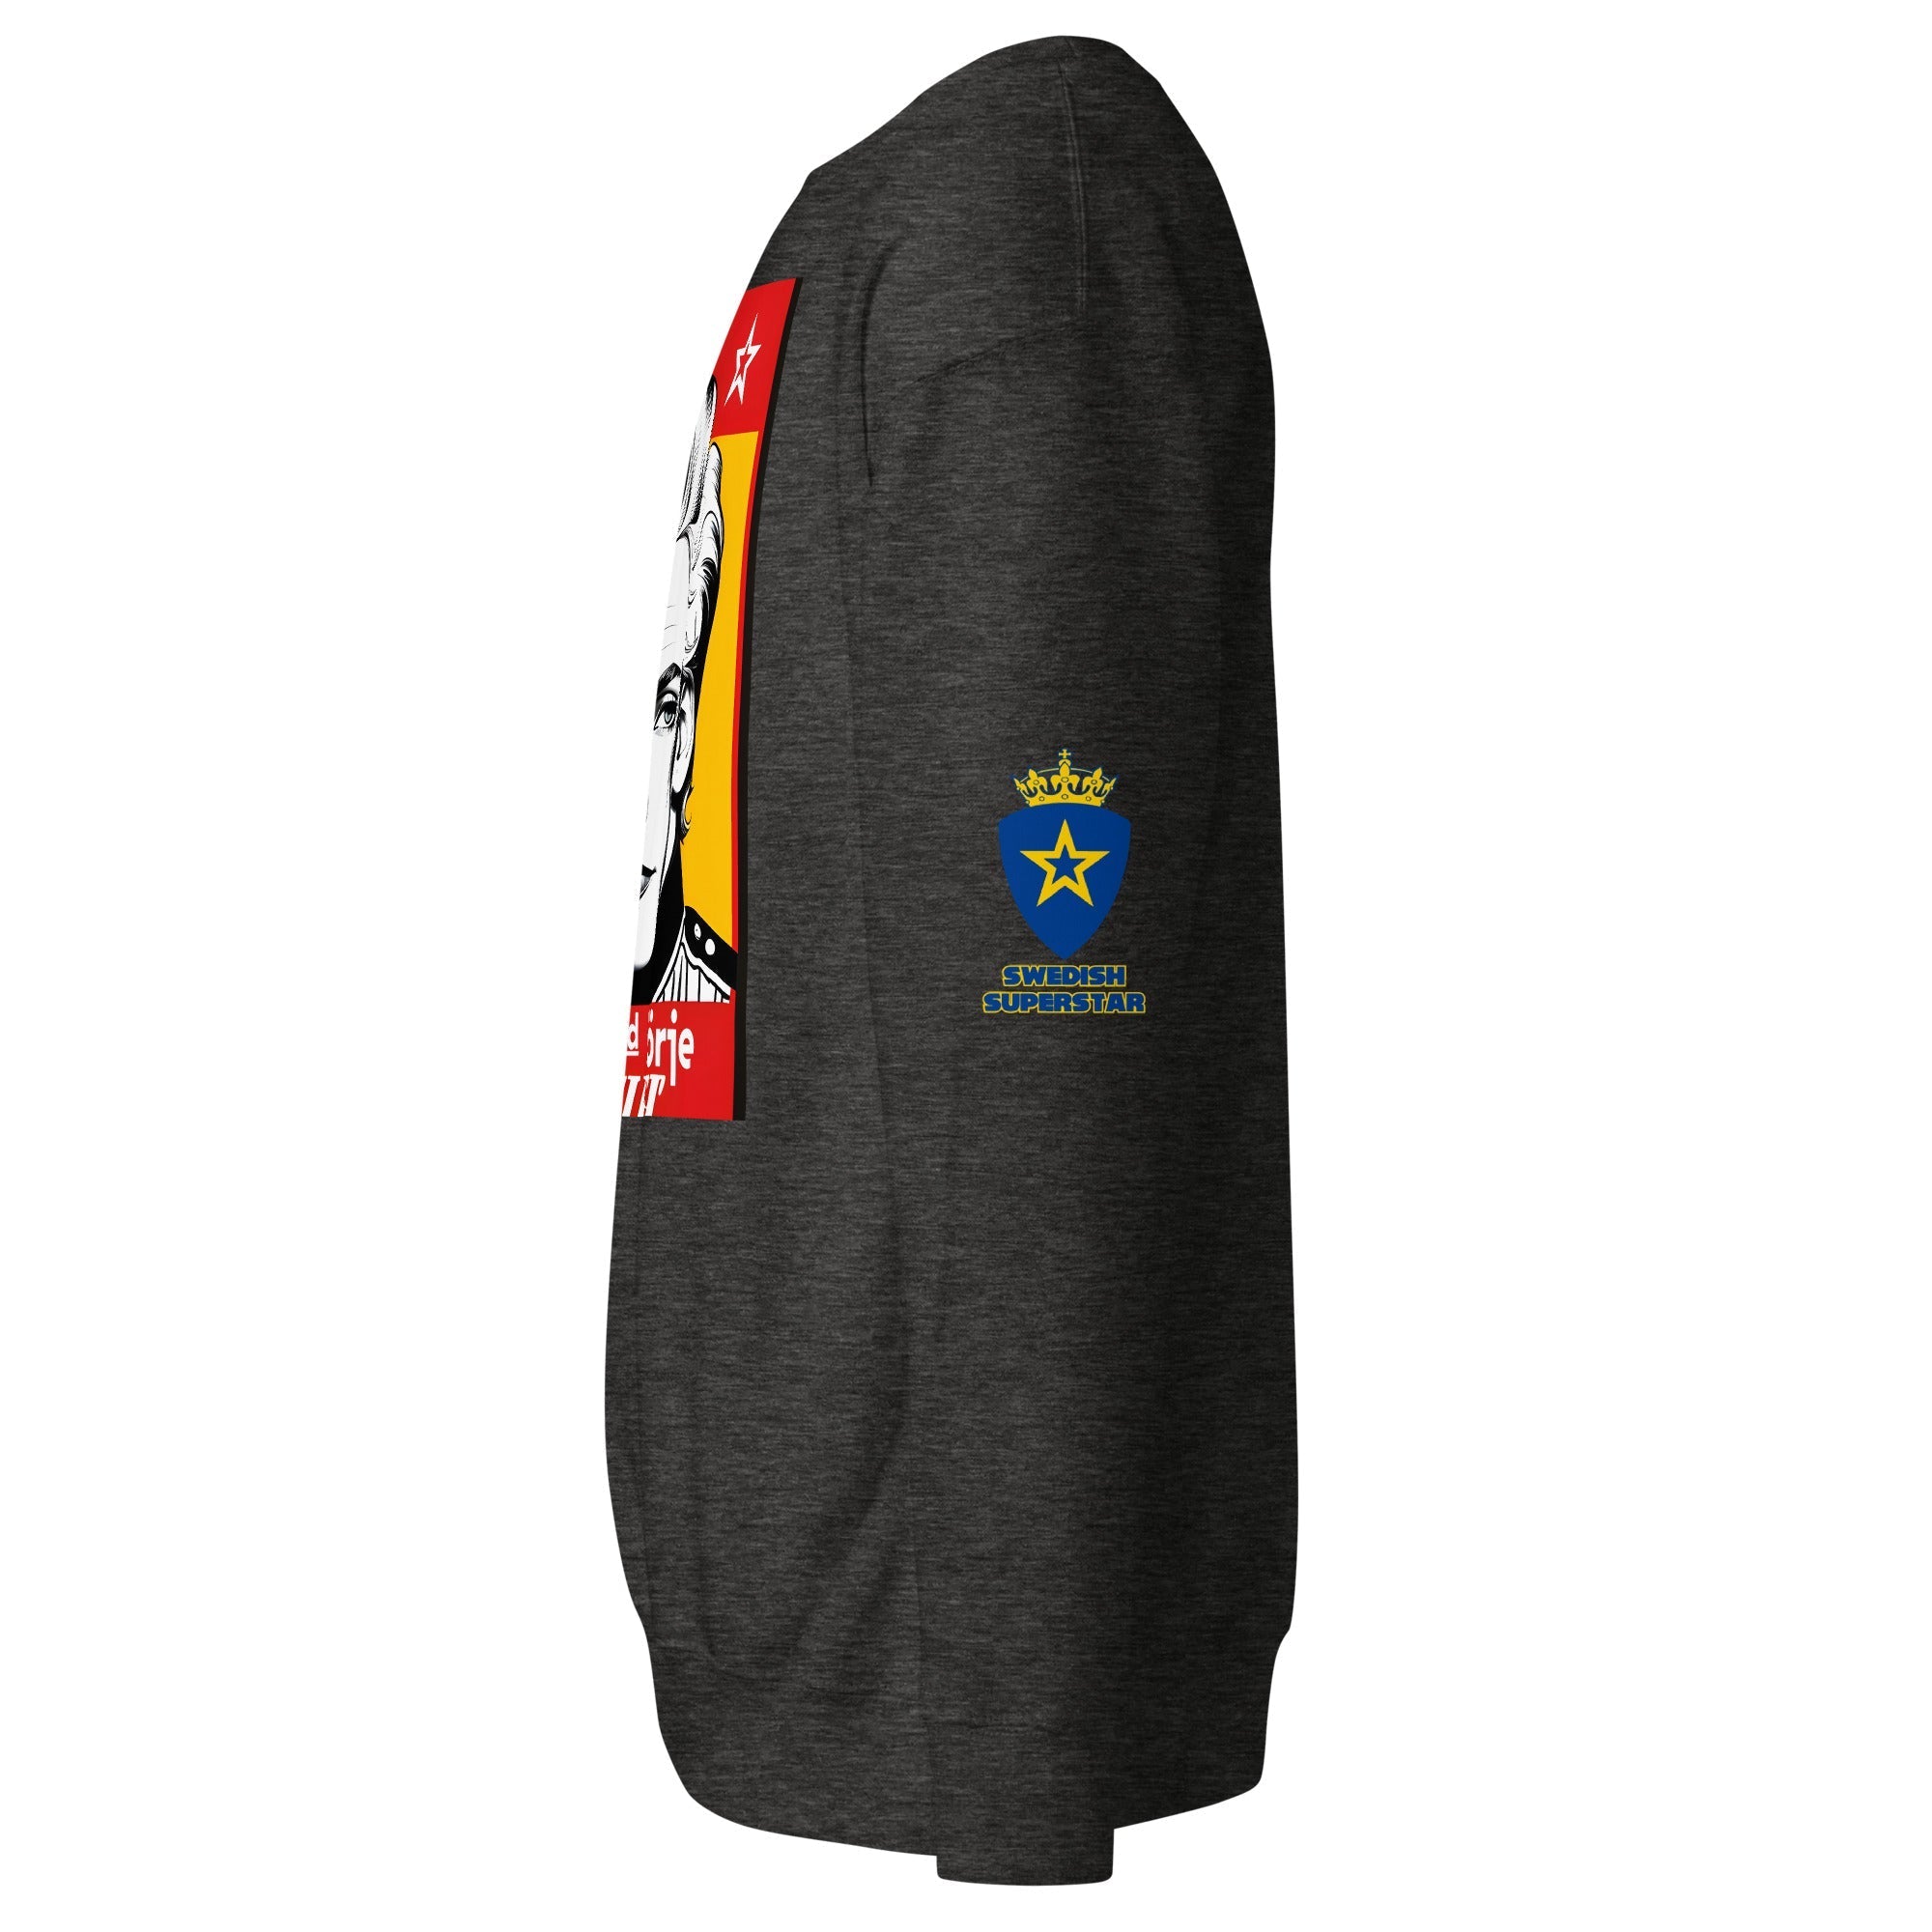 Unisex Premium Sweatshirt - Swedish Superstar Series v.27 - GRAPHIC T-SHIRTS